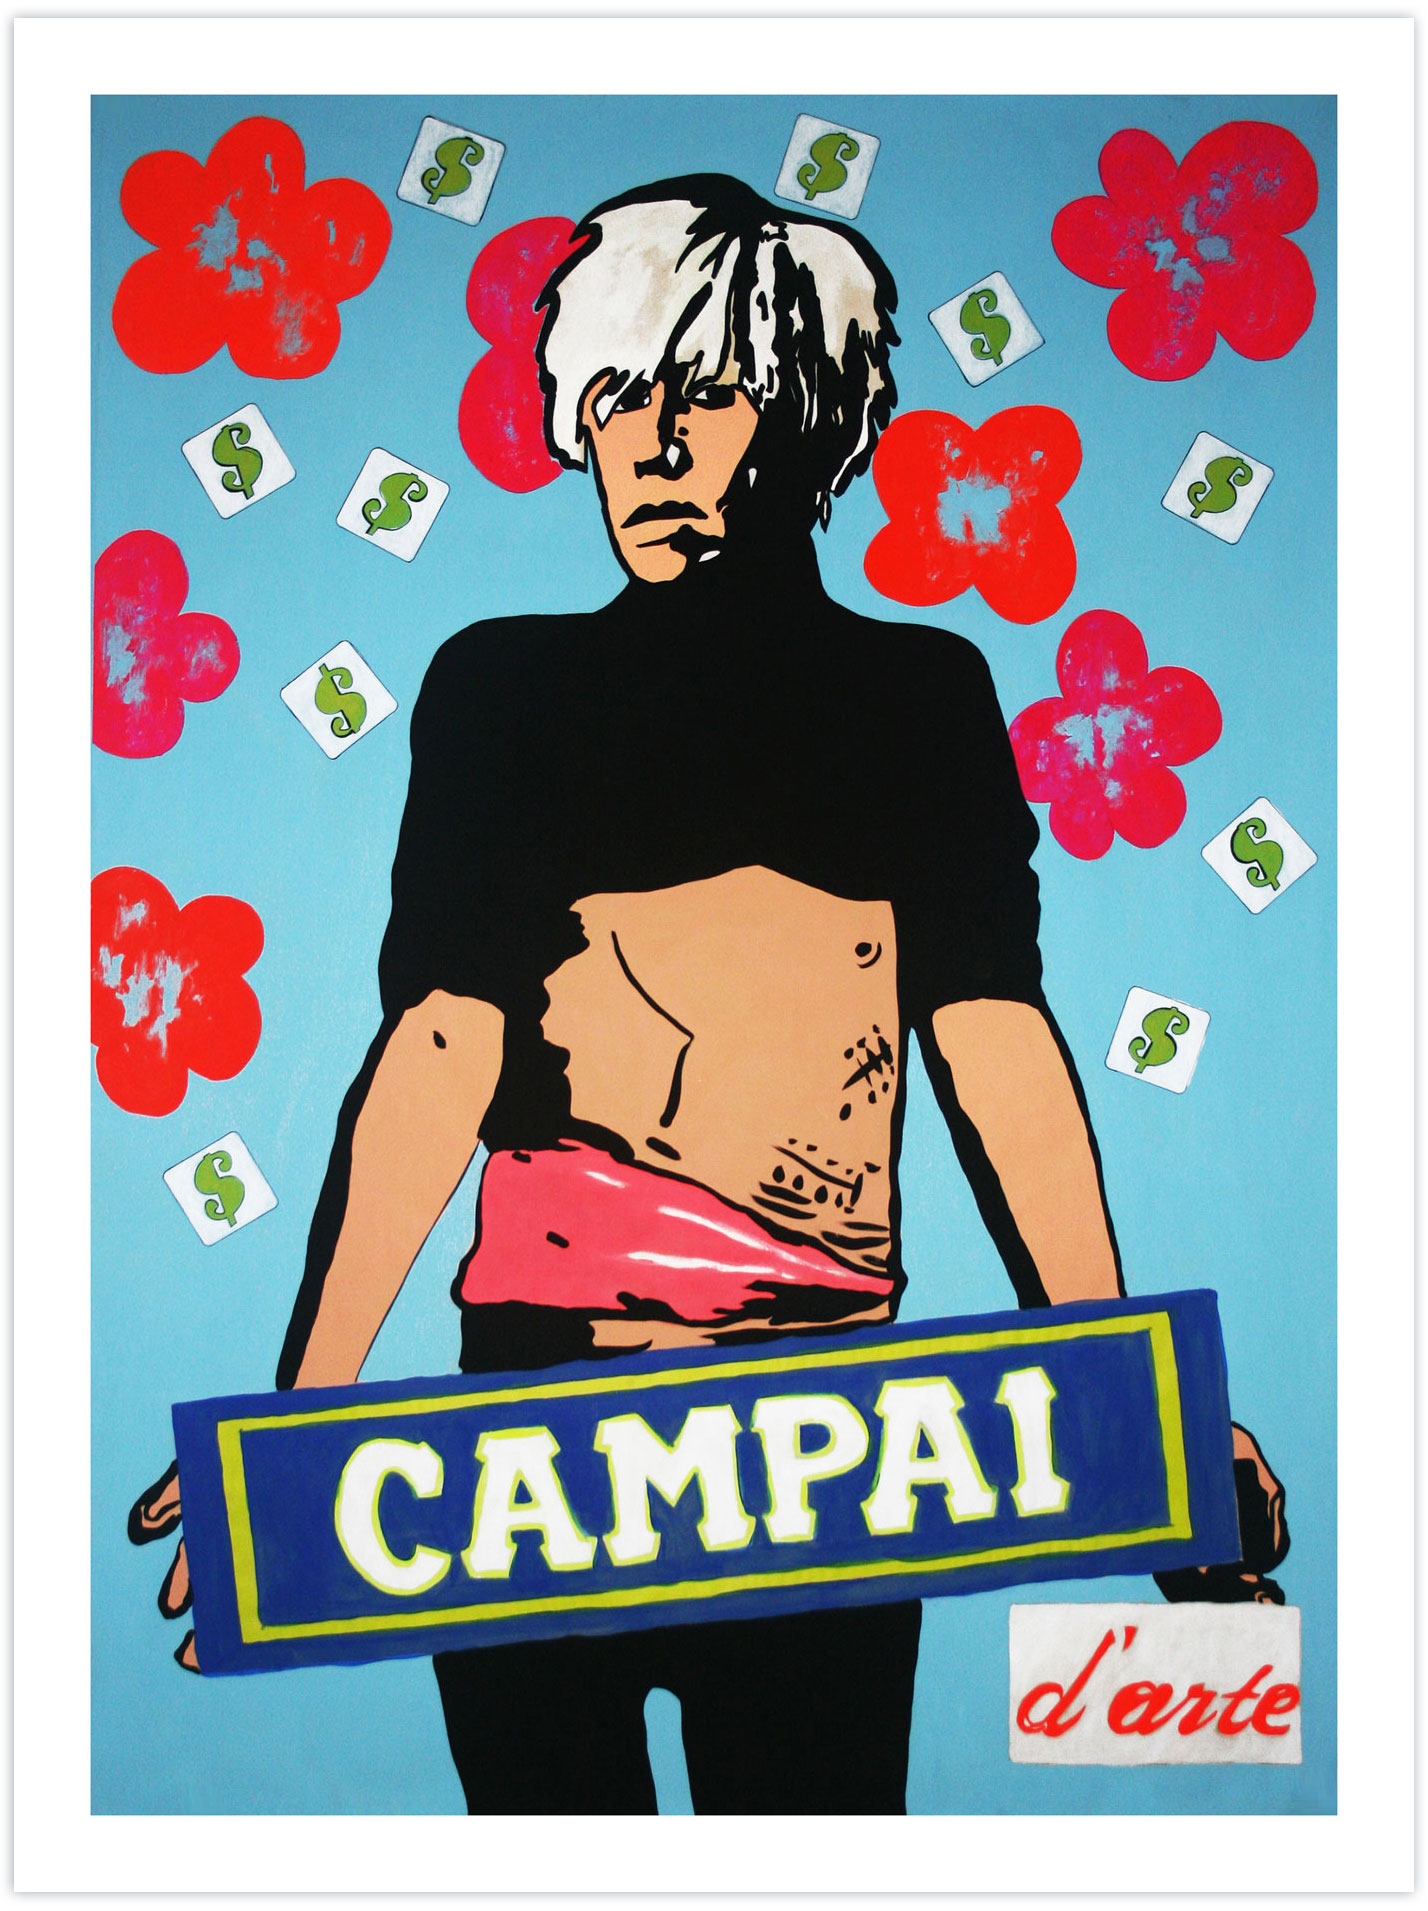 Campai d'Arte (Andy Warhol) 2017 